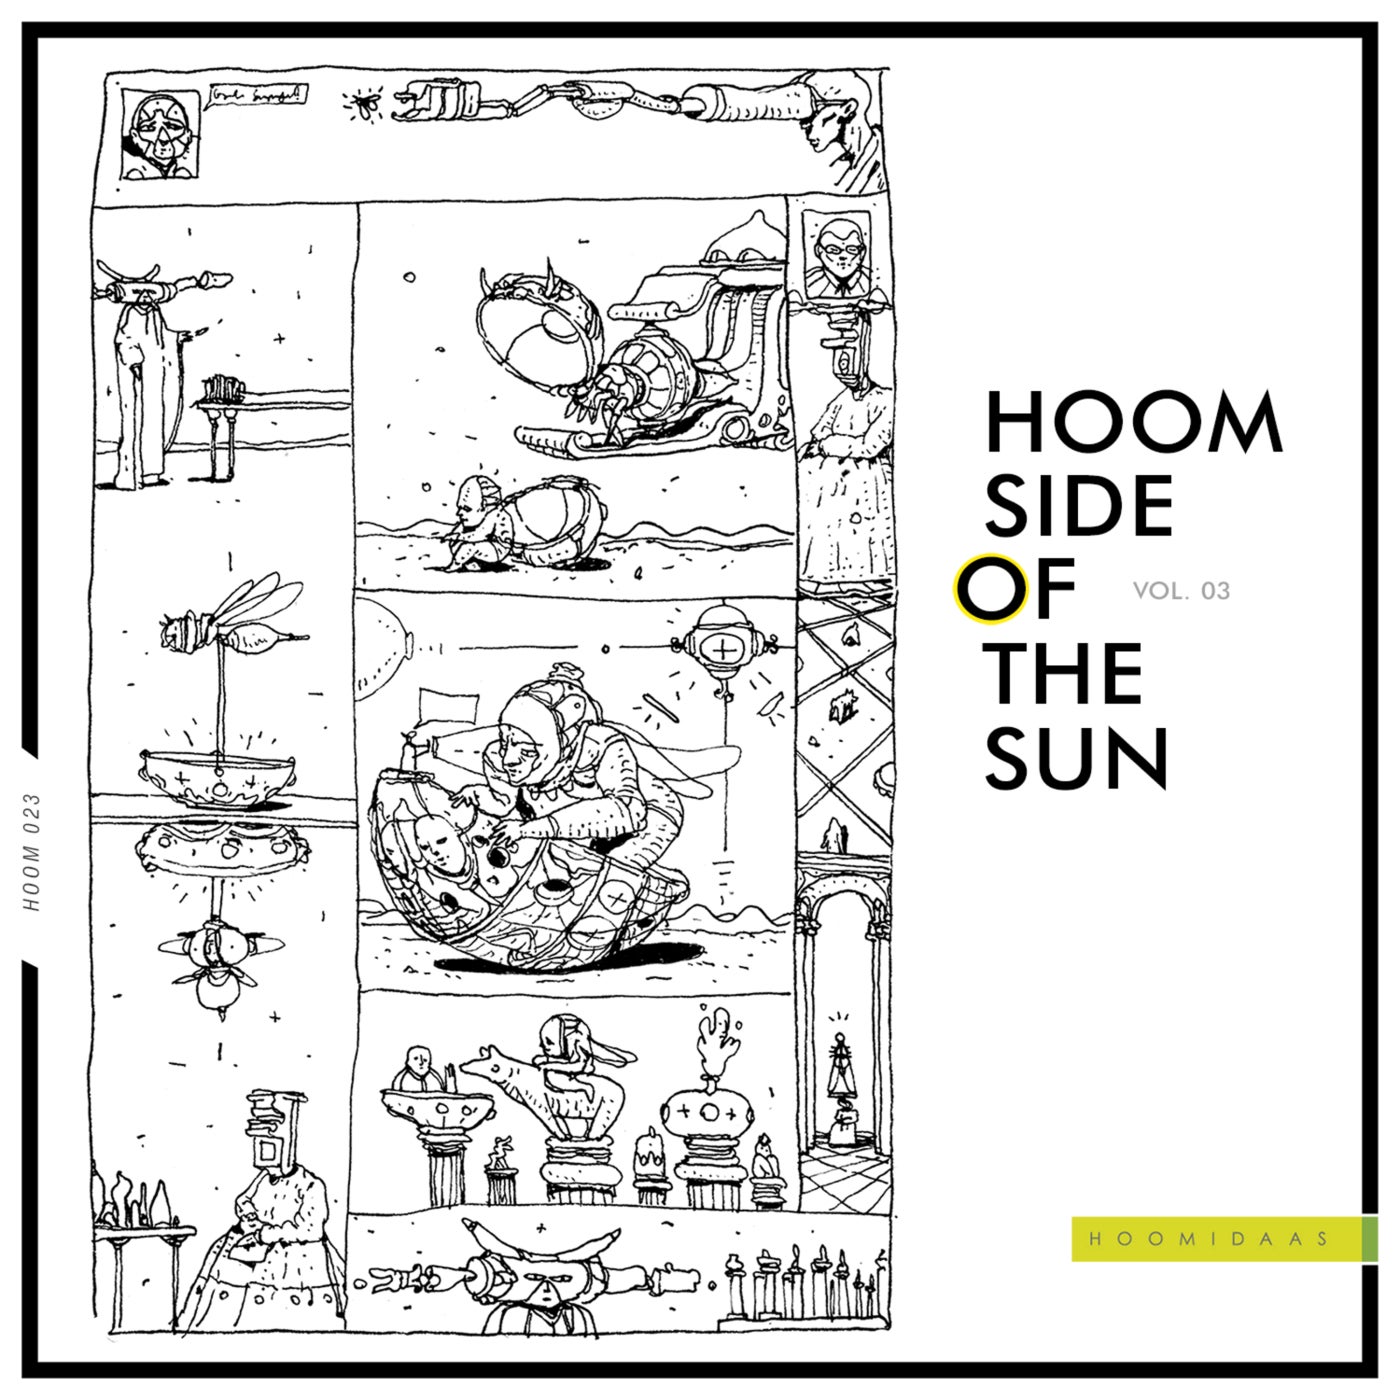 VA - Hoom Side of the Sun, Vol. 03 [HOOM023]